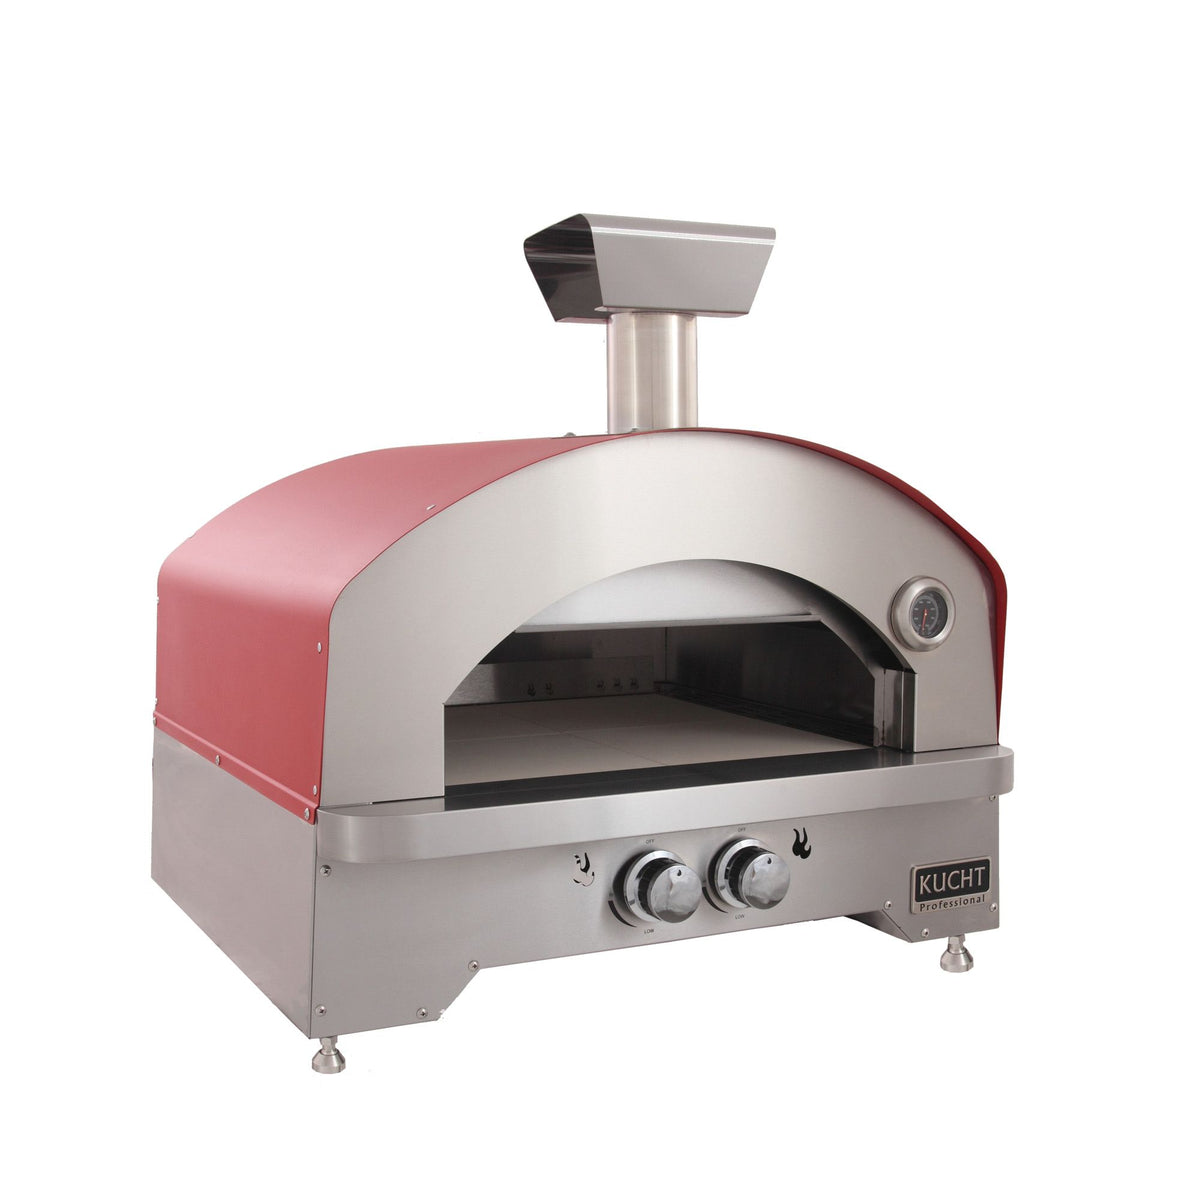 KUCHT Napoli Gas Outdoor Pizza Oven